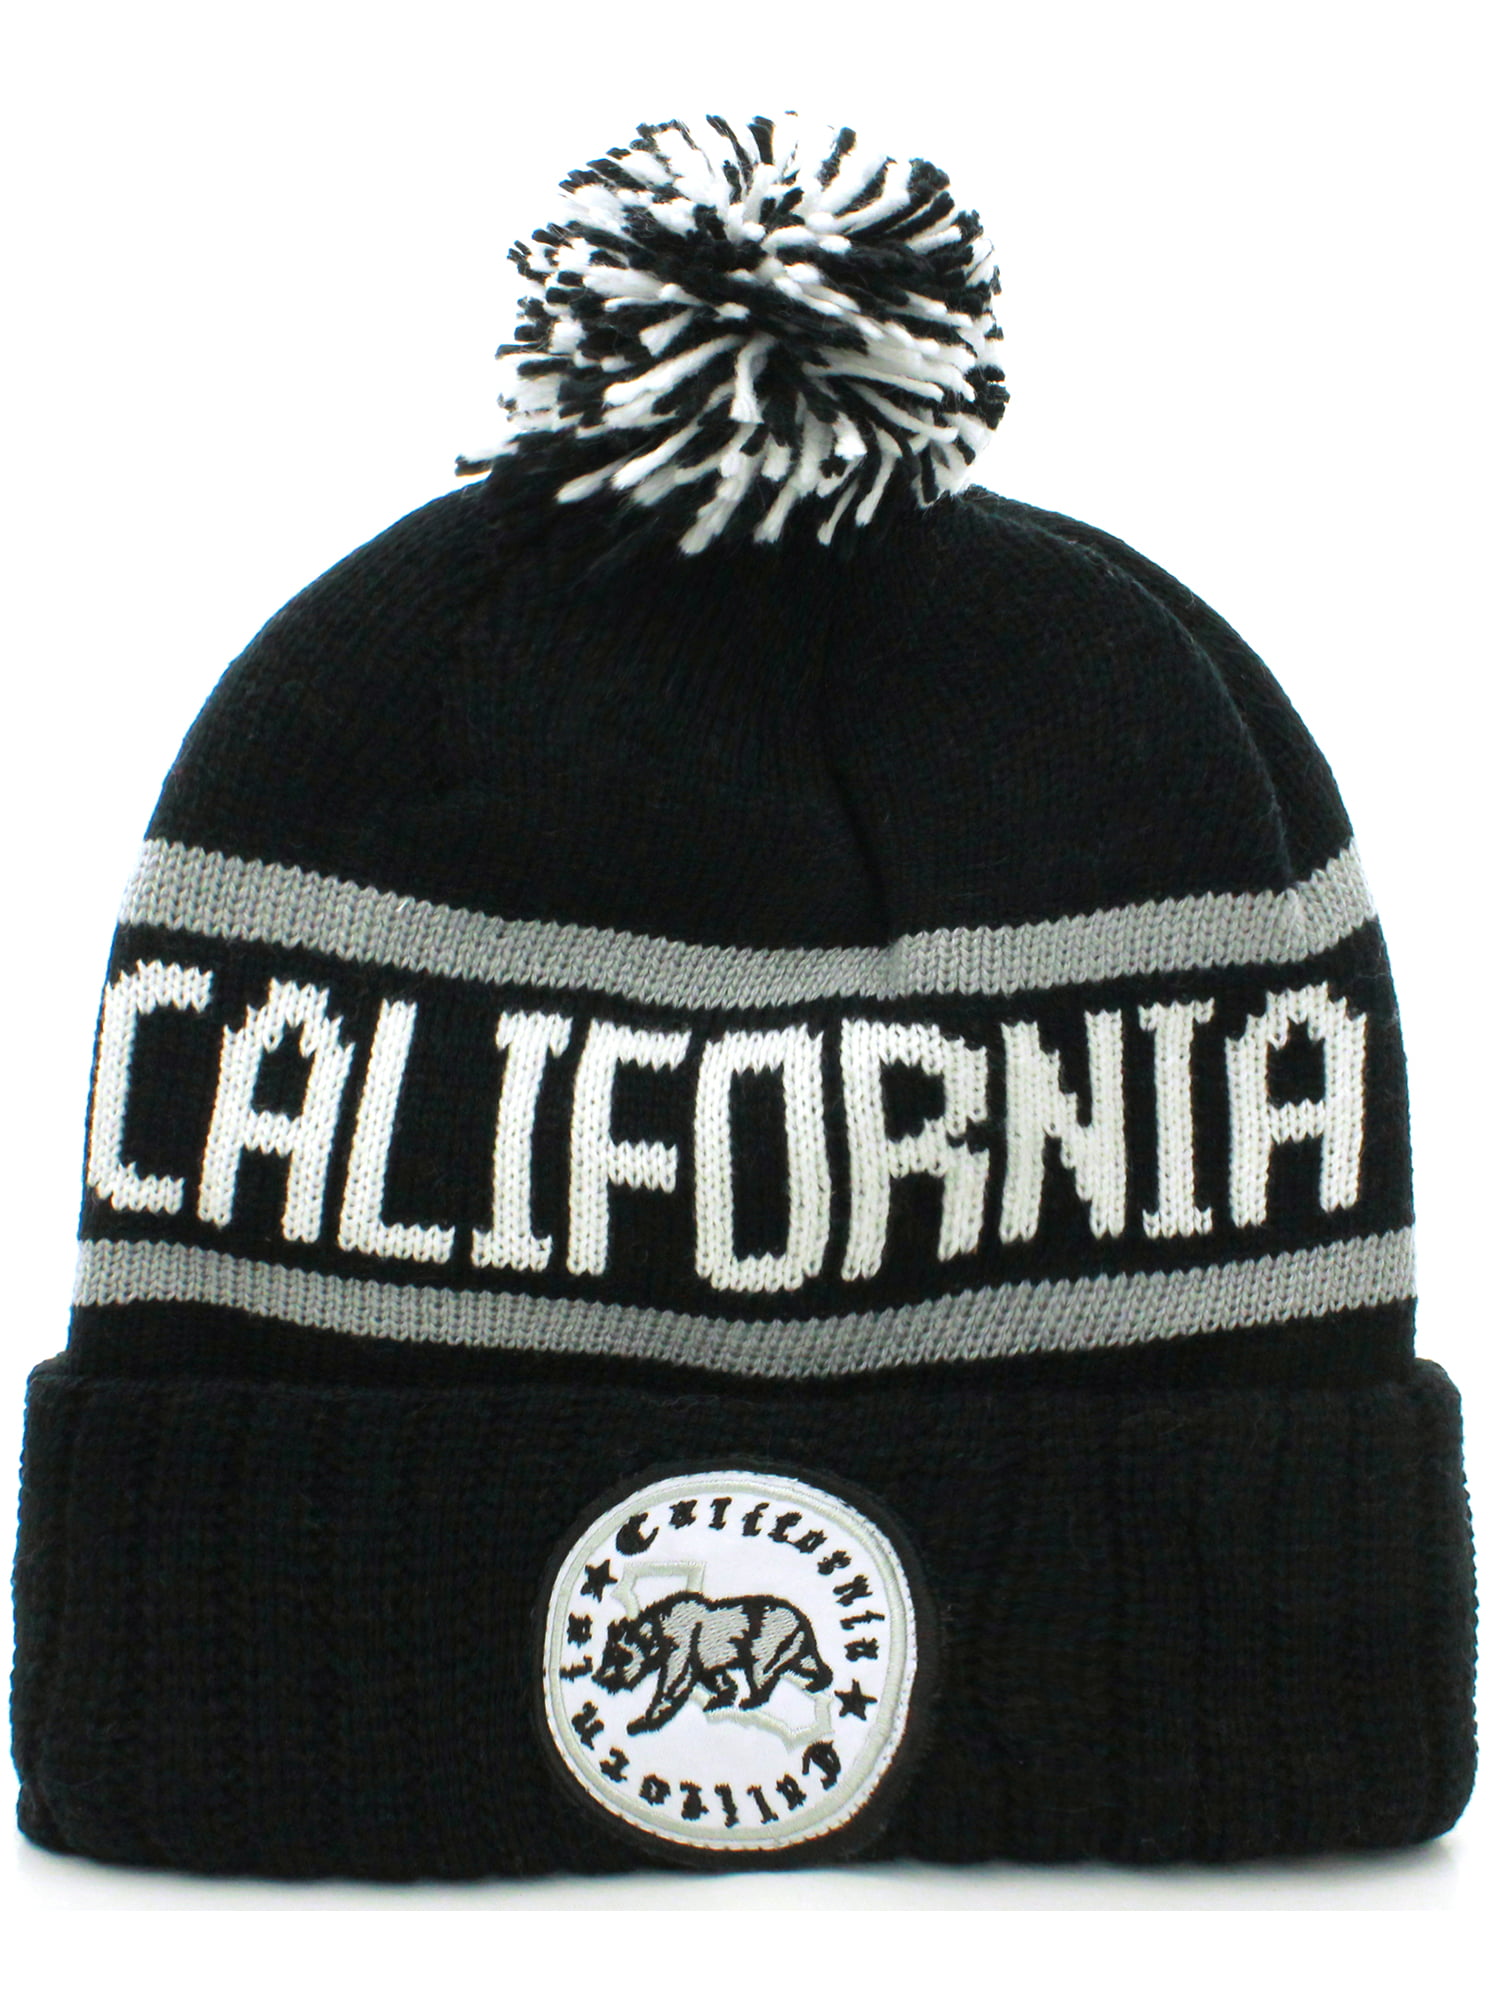 American Cities California Republic Cuff Beanie Cable Knit Pom Hat - Walmart.com